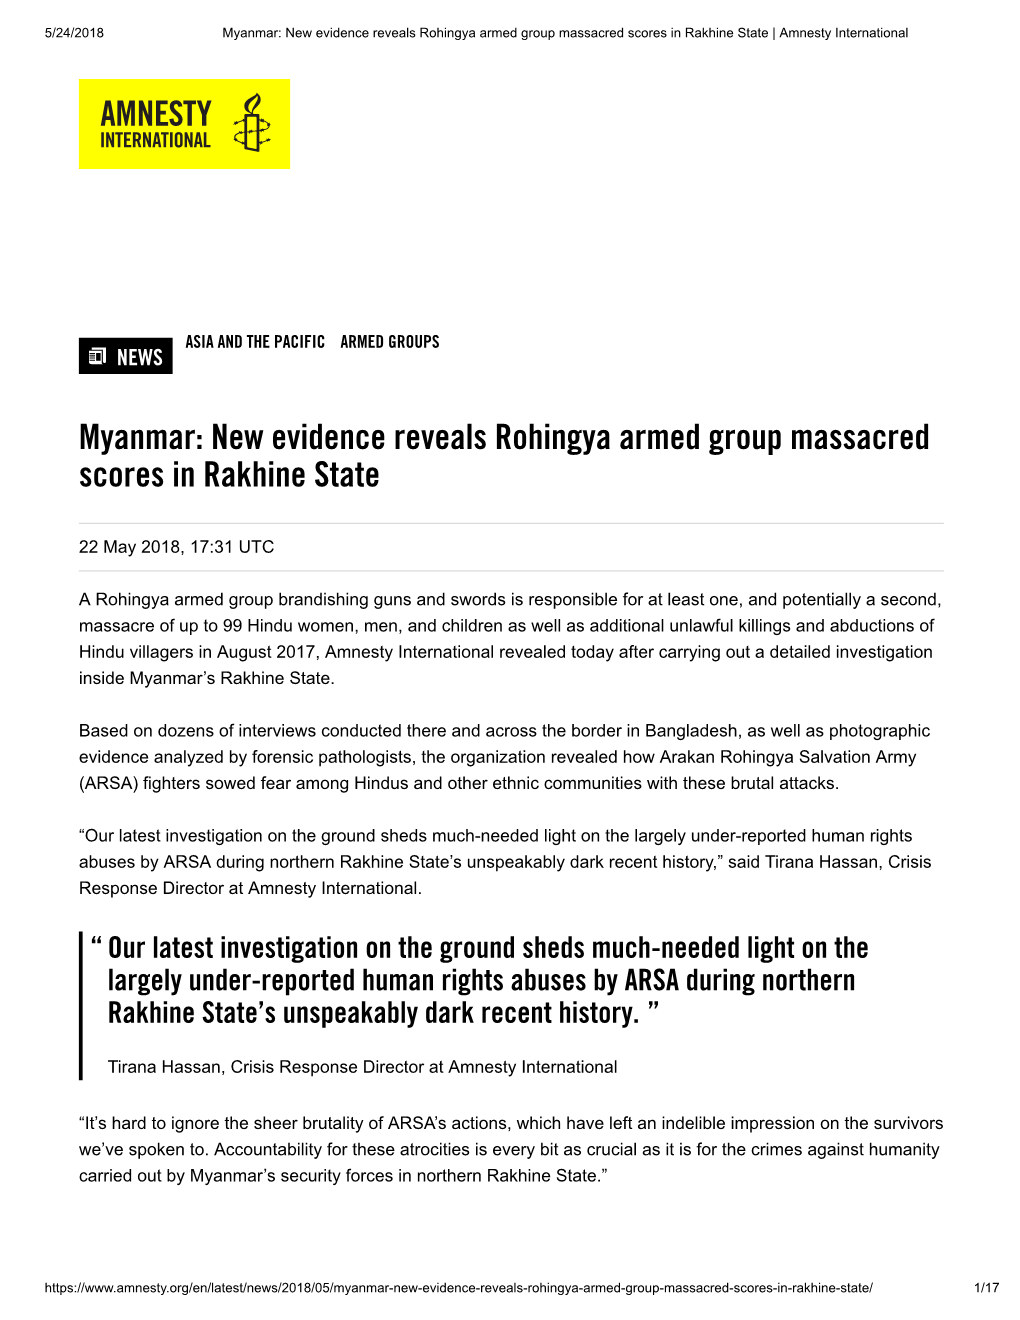 Myanmar: New Evidence Reveals Rohingya Armed Group Massacred Scores in Rakhine State | Amnesty International